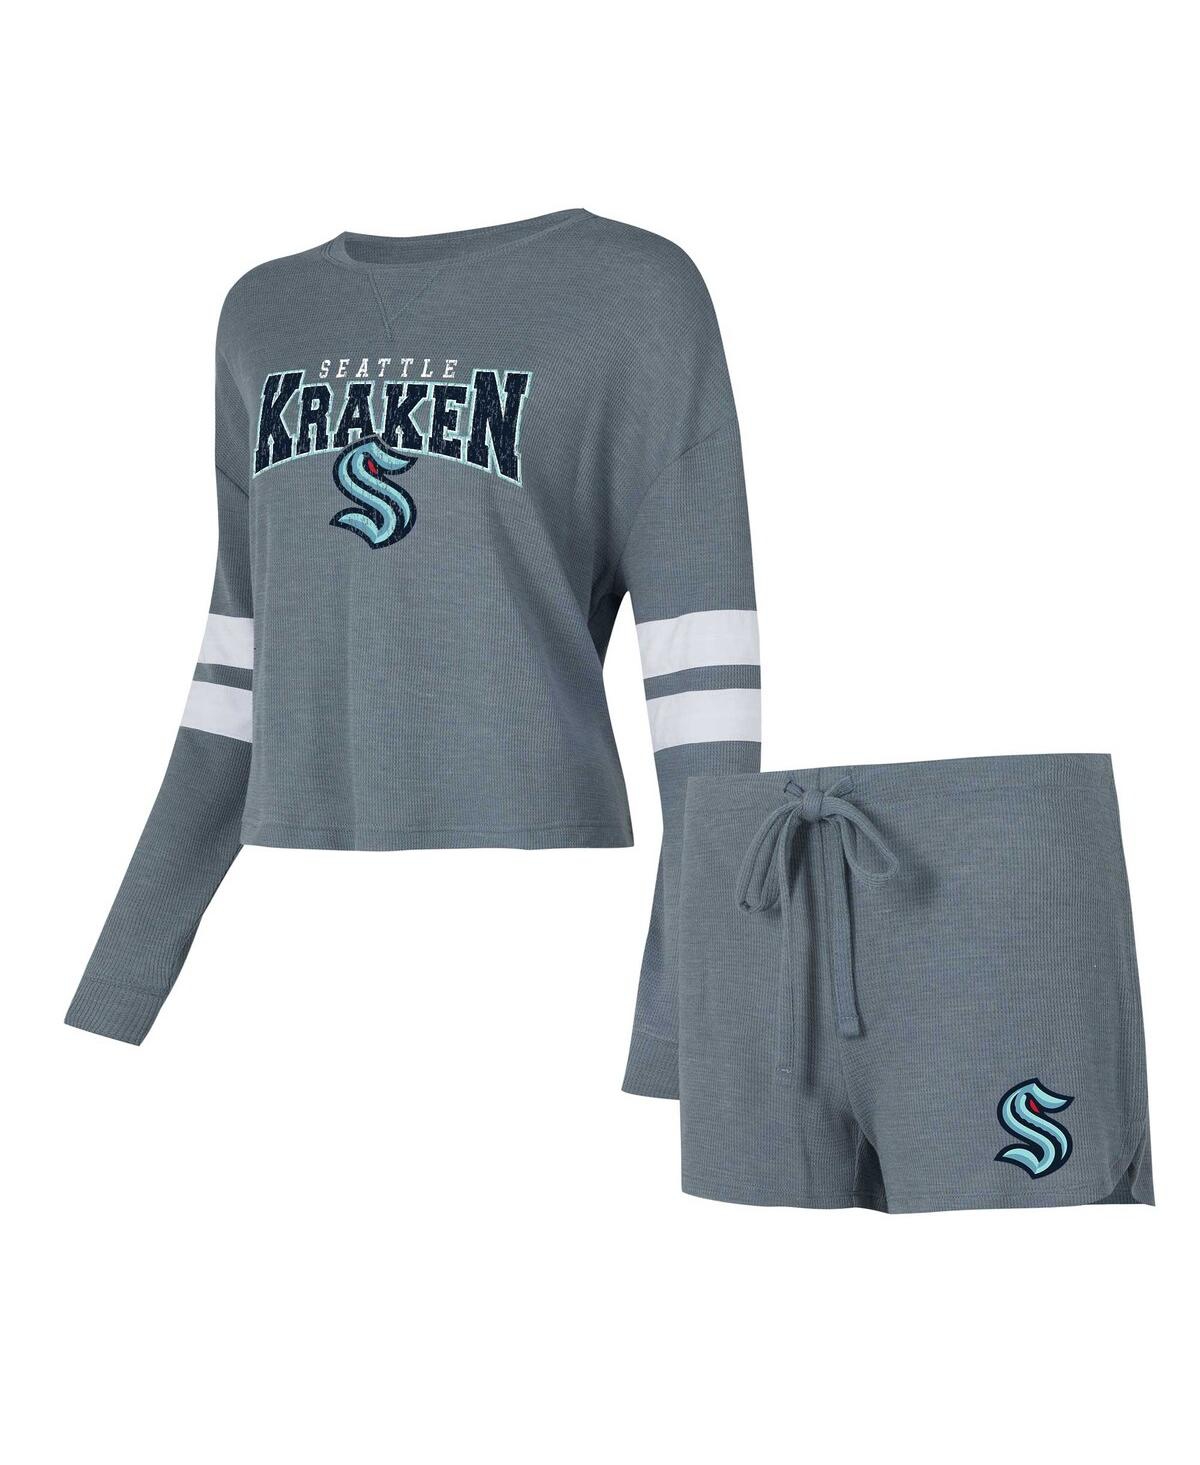 Women's Concepts Sport Charcoal Distressed Seattle Kraken MeadowÂ Long Sleeve T-shirt and Shorts Sleep Set - Charcoal